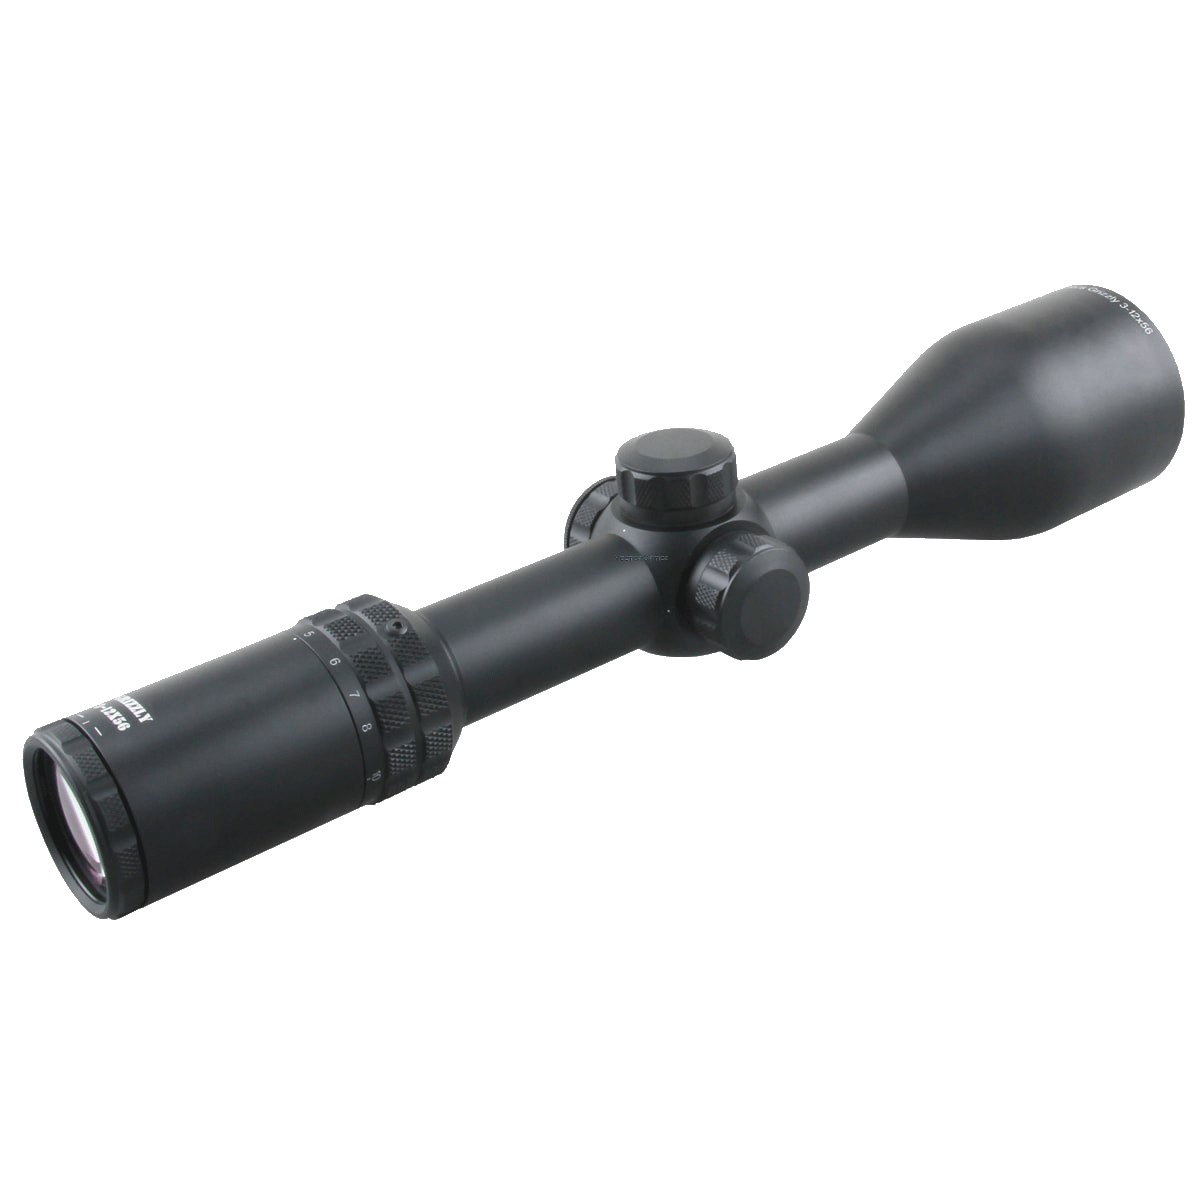 Vector Optics - Grizzly. 3-12 x 56 SFP Riflescope